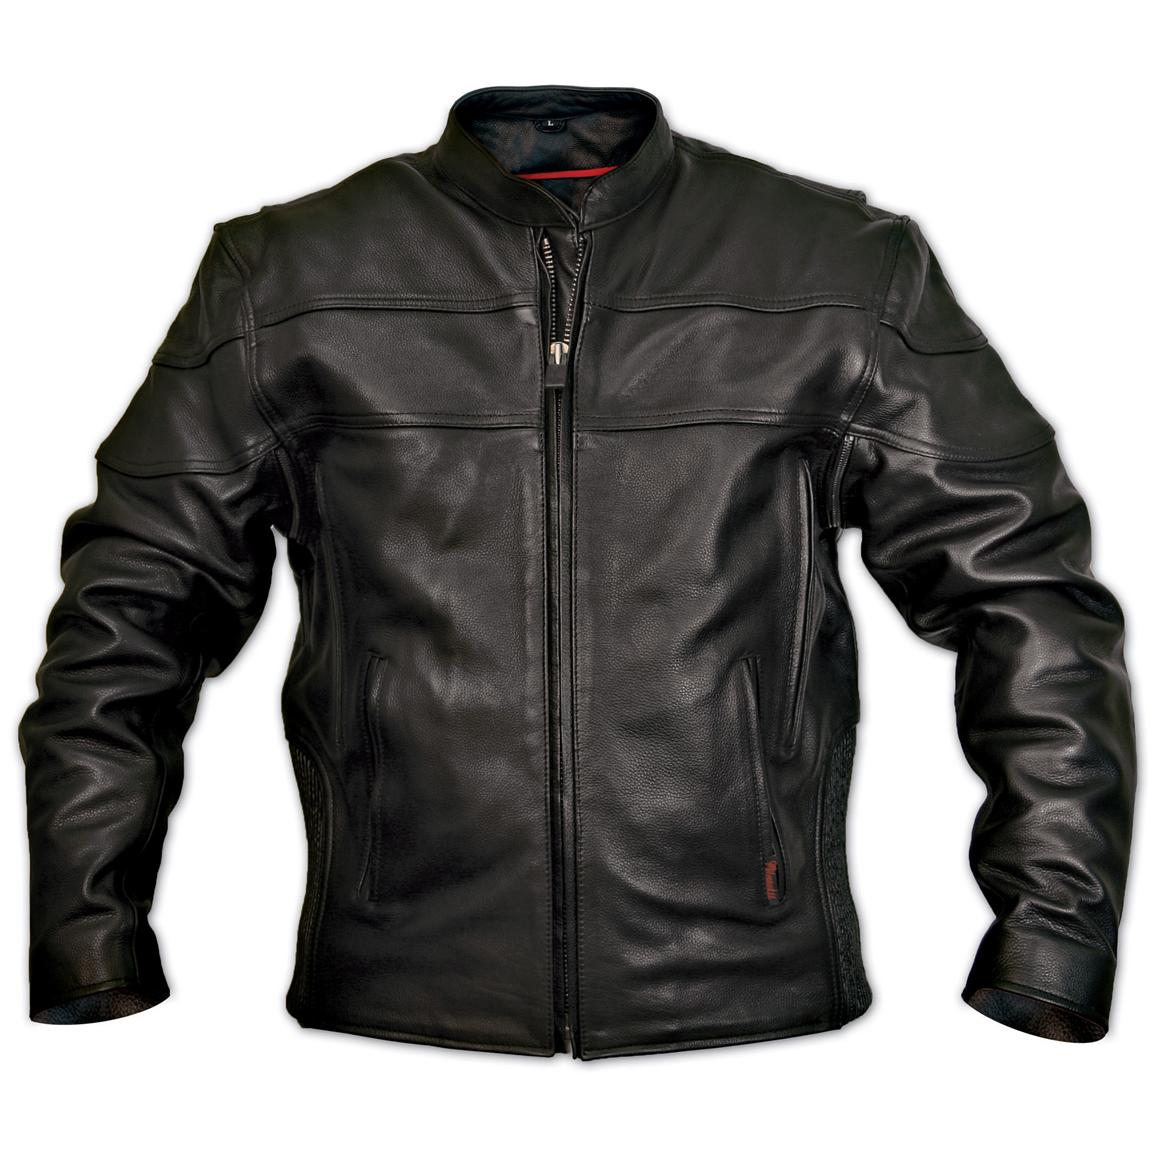 Maverick Jacket by Milwaukee Motorcycle Clothing Company